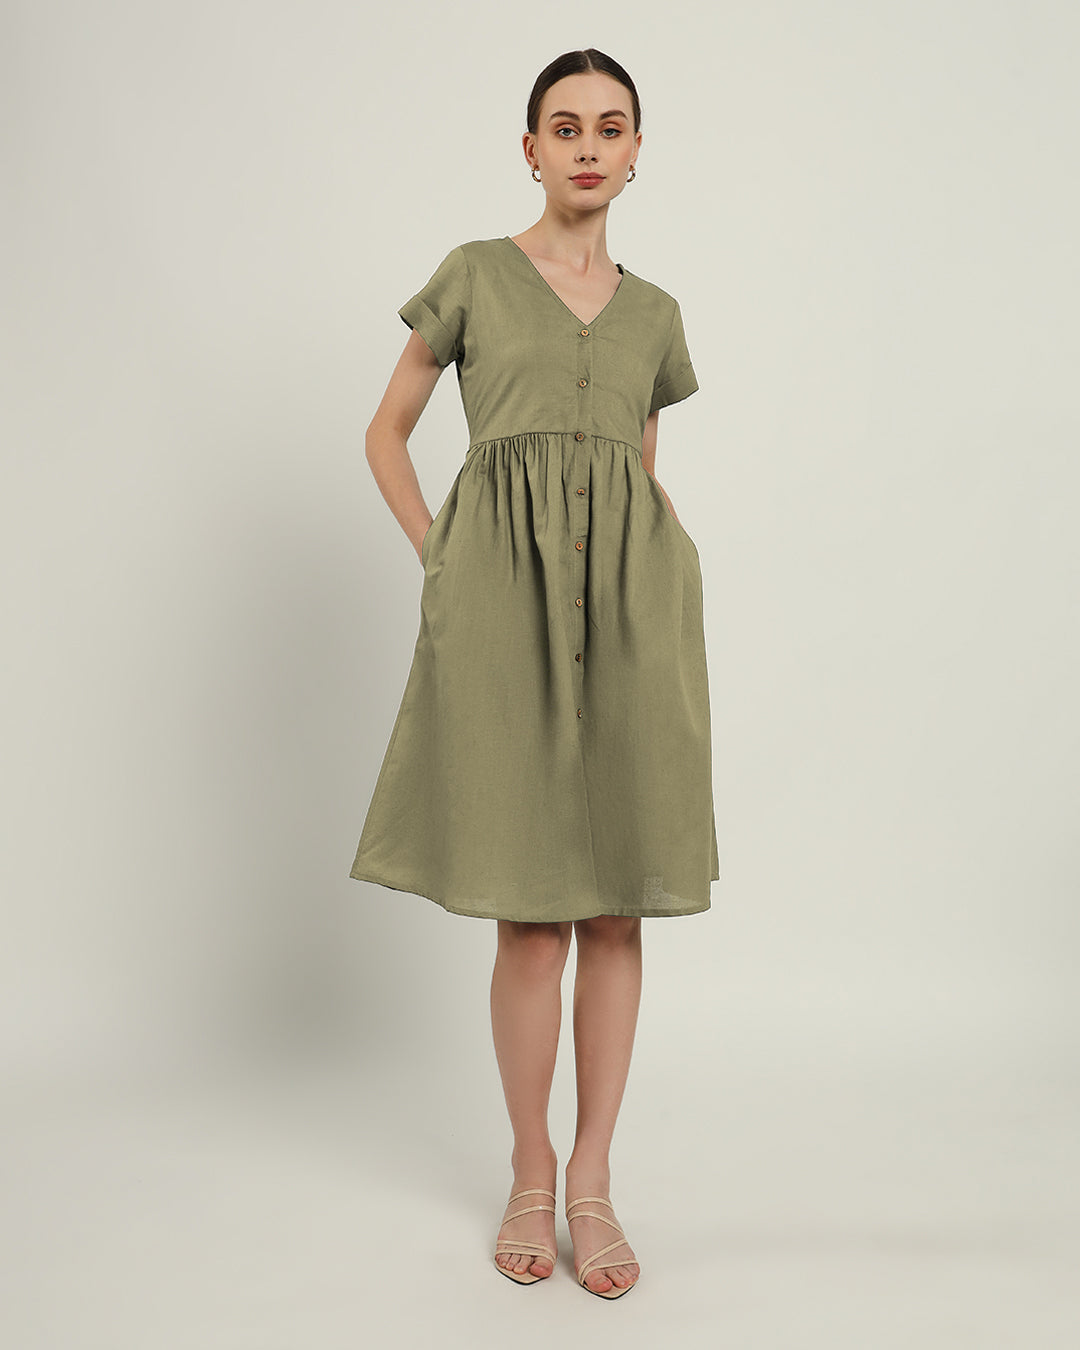 The Valence Daisy Olive Linen Dress